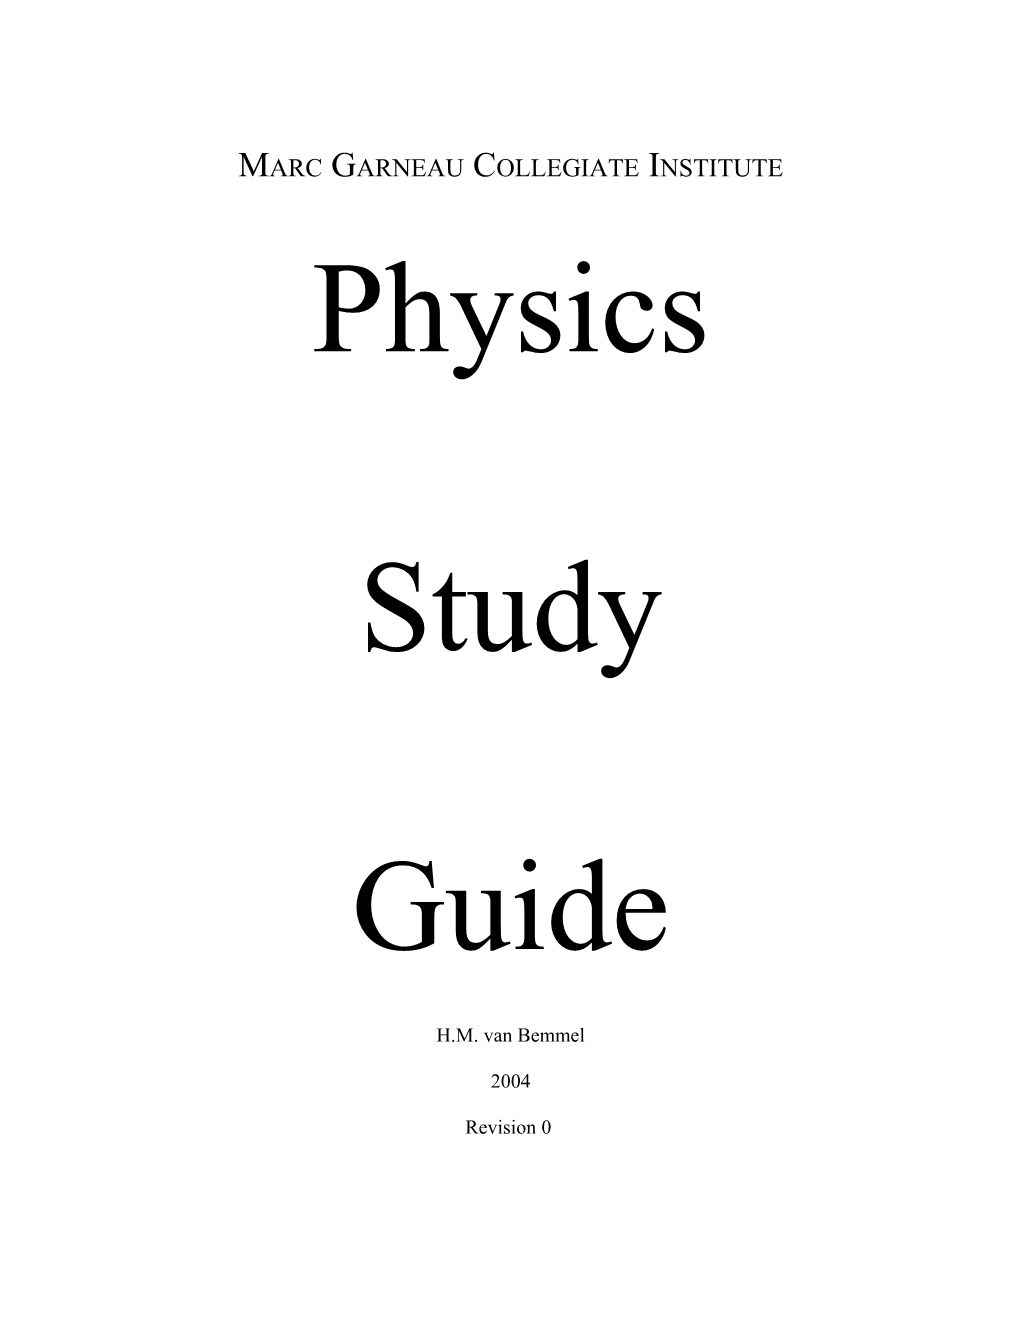 MGCI Physics Study Guide - 45